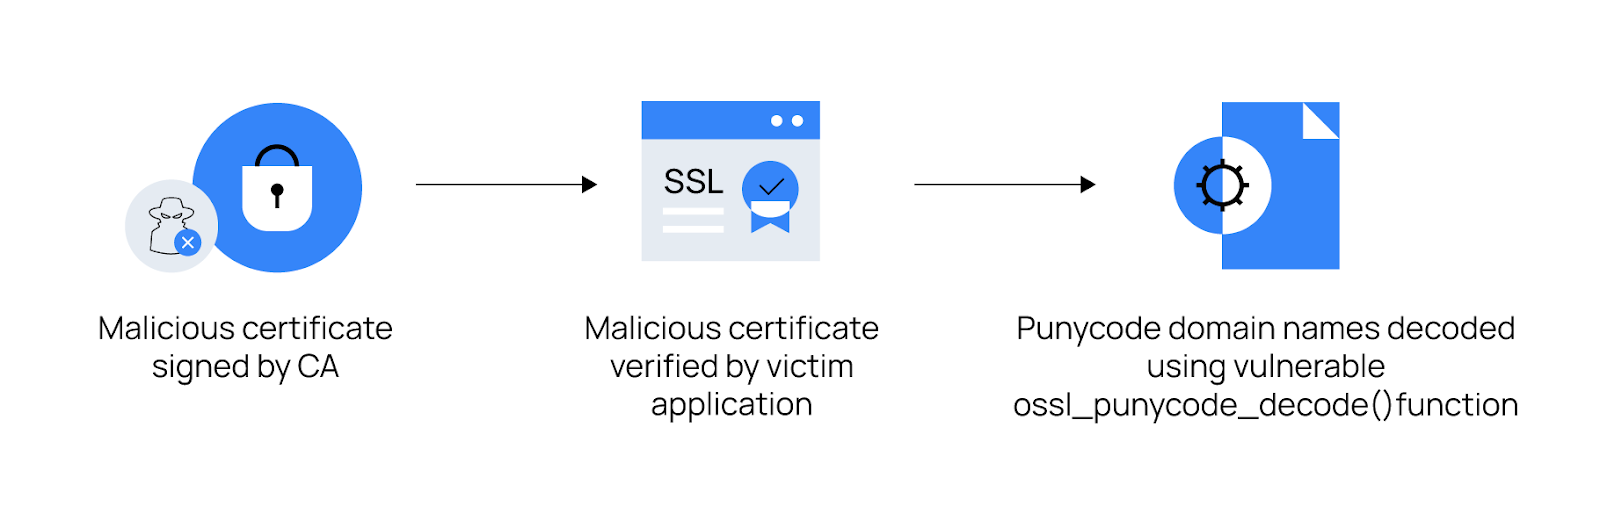 Auditoria de vulnerabilidade OpenSSL 3.0